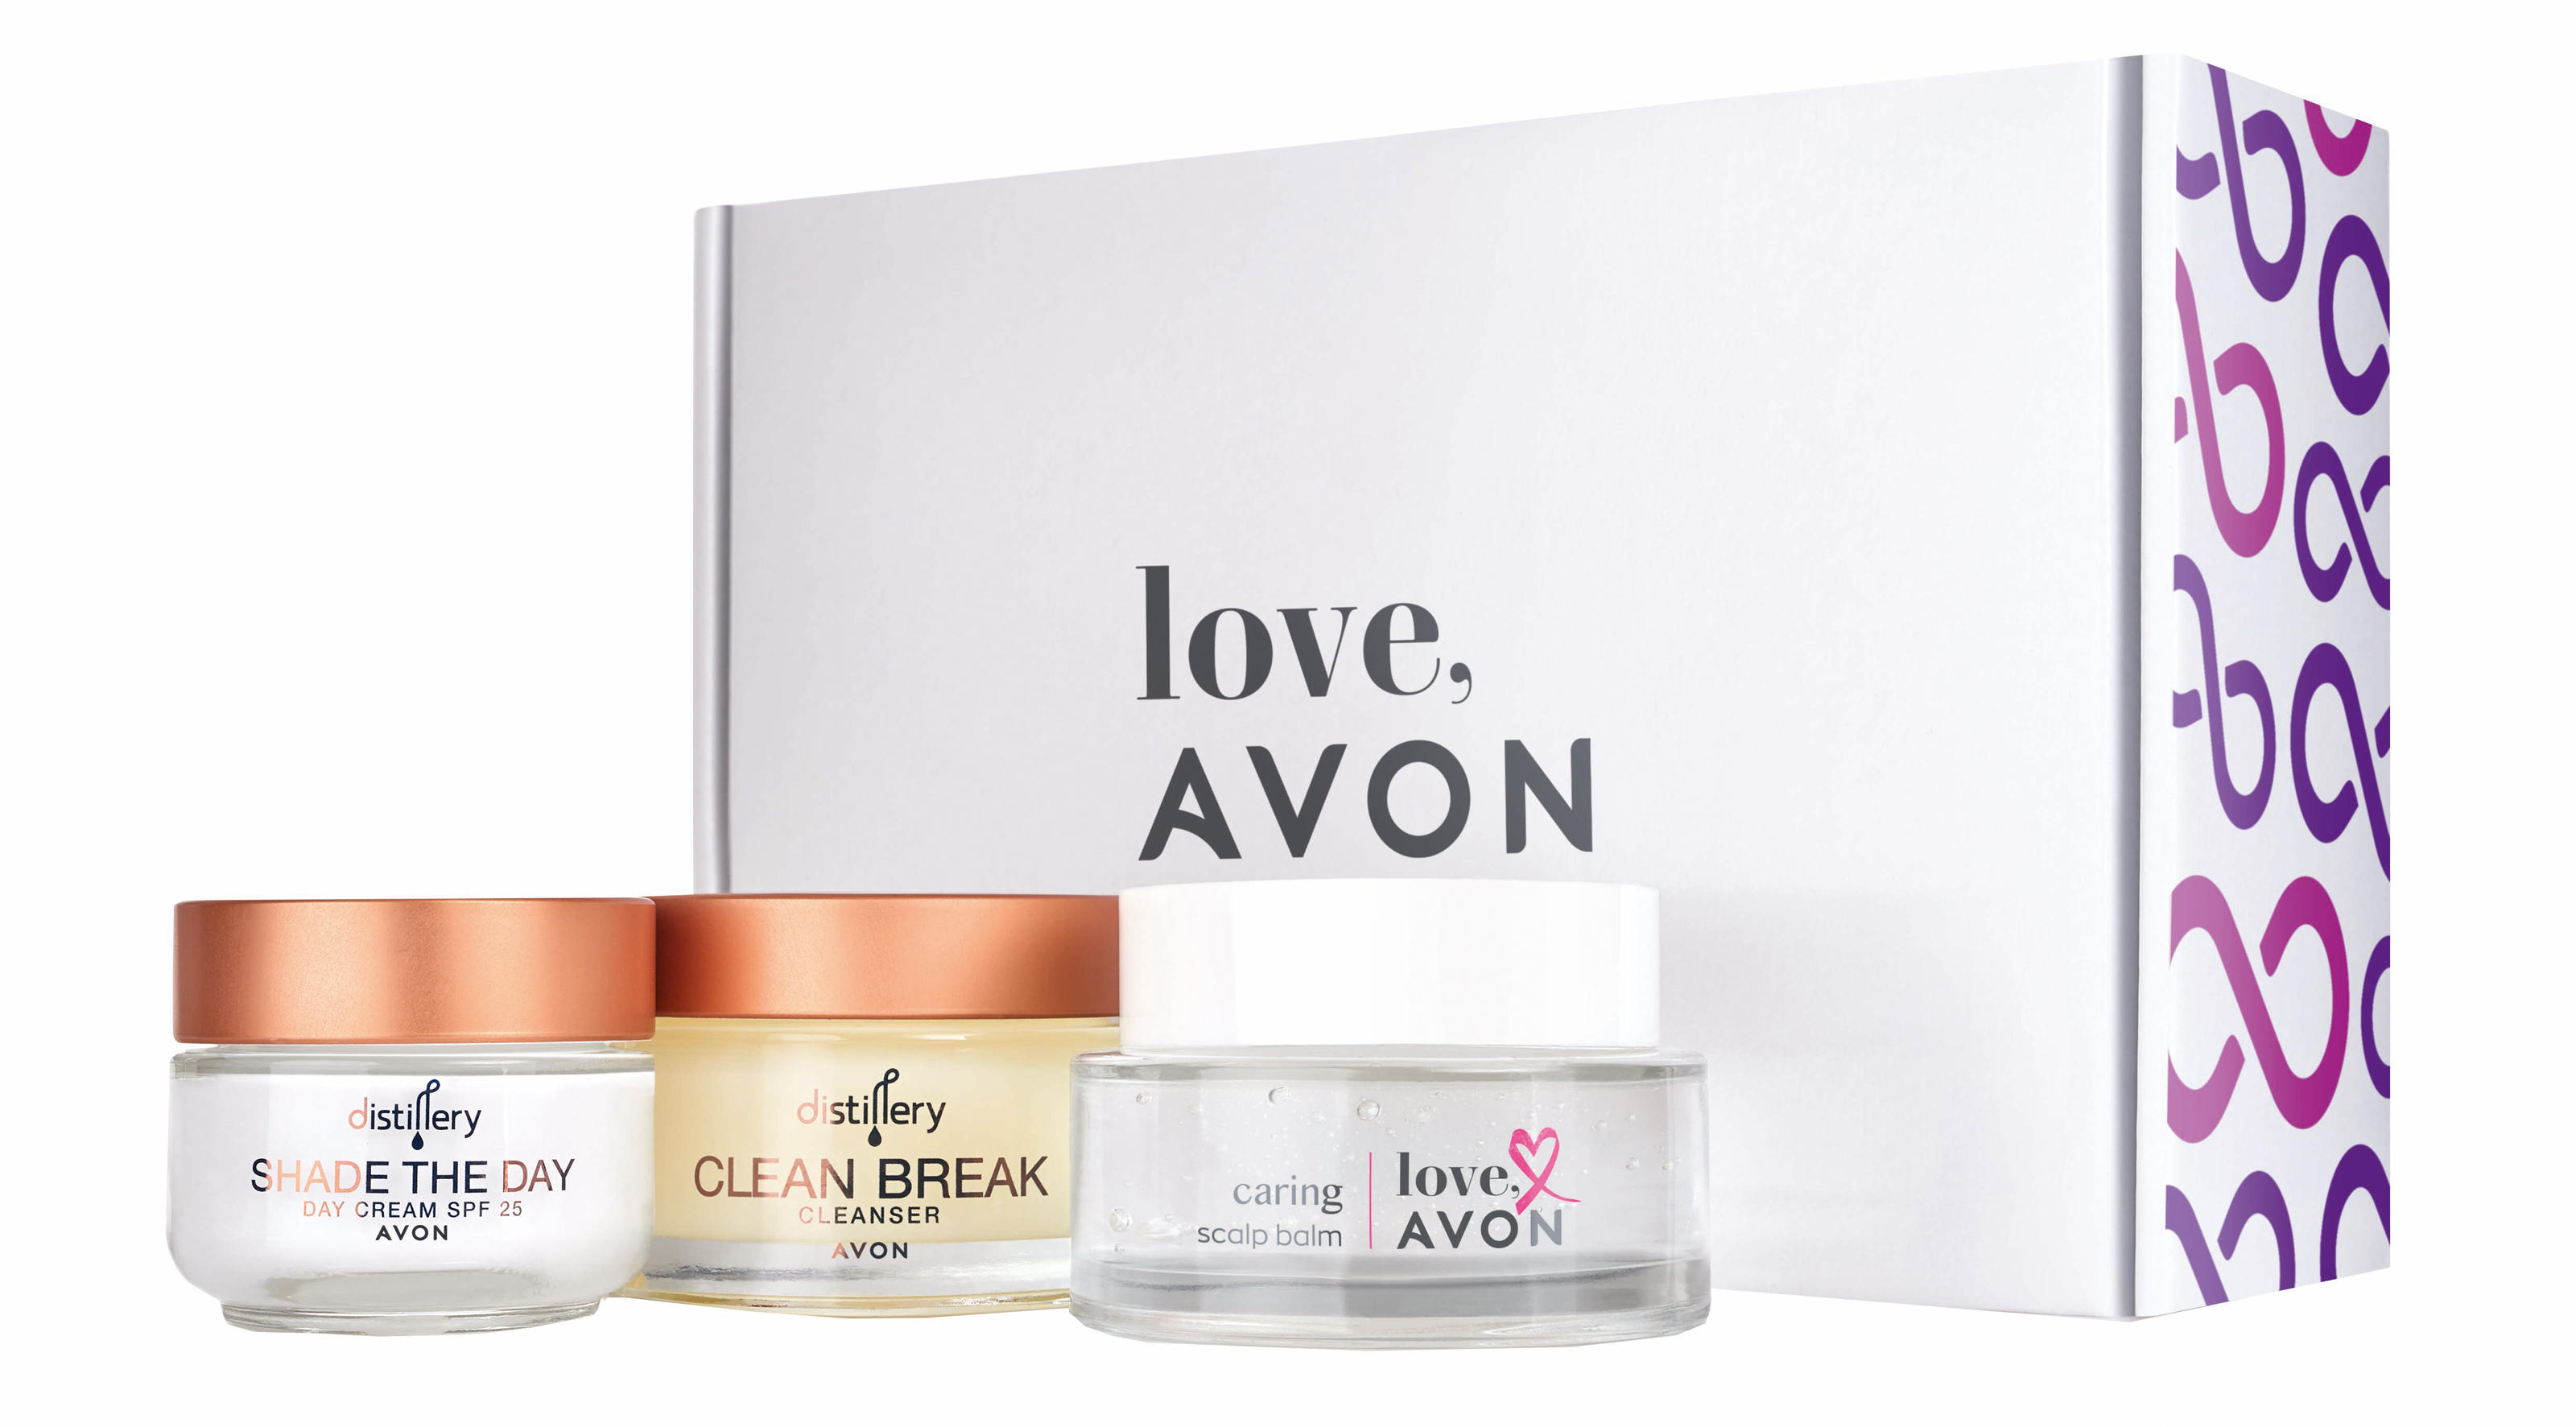 Avon love, avon cancer care pack